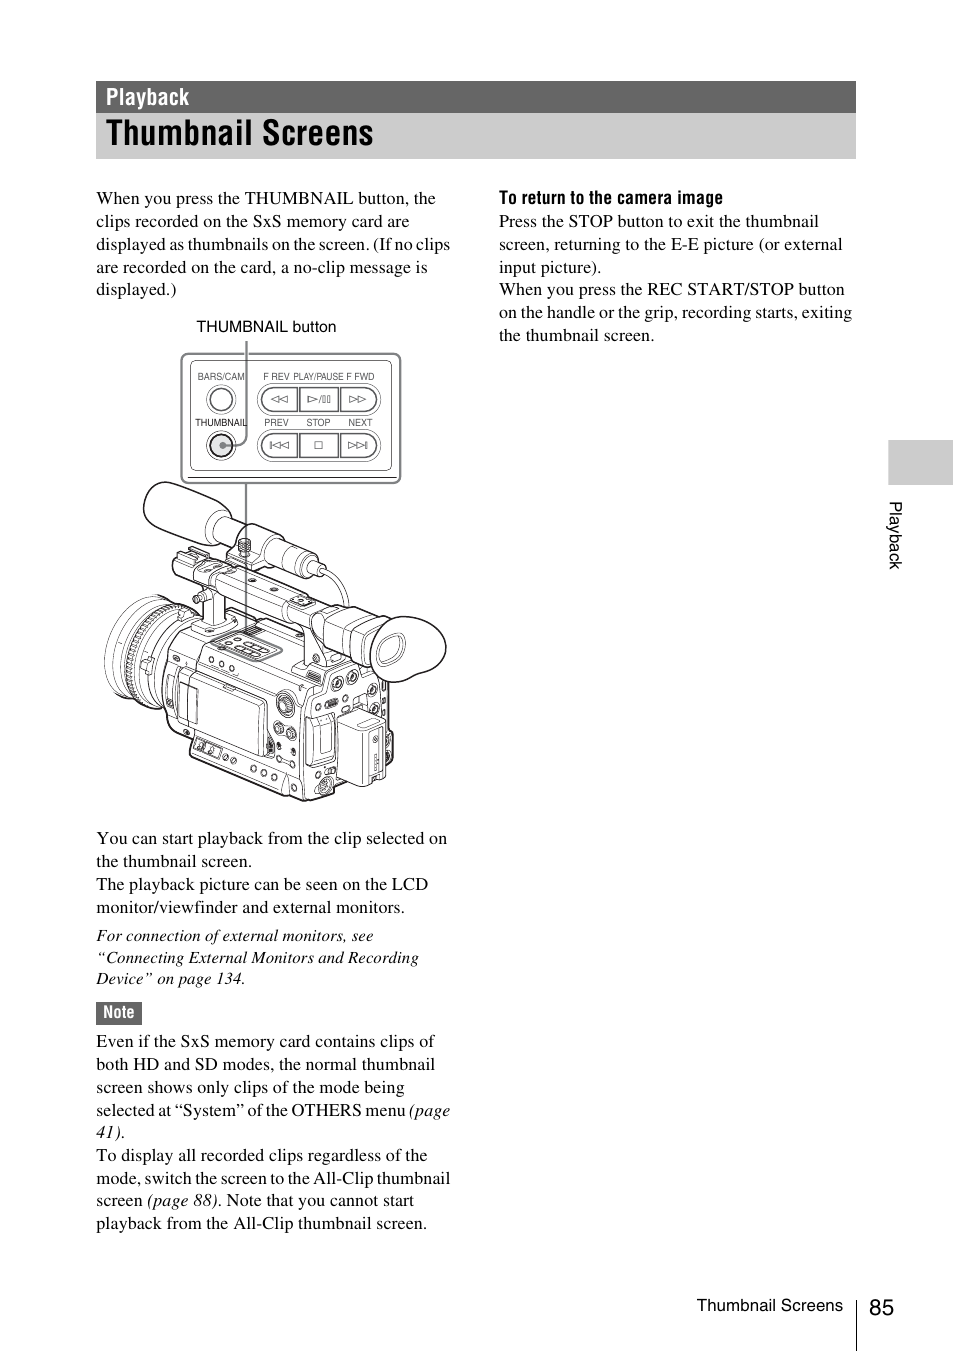 Playback, Thumbnail screens | Sony PMW-F3K User Manual | Page 85 / 164